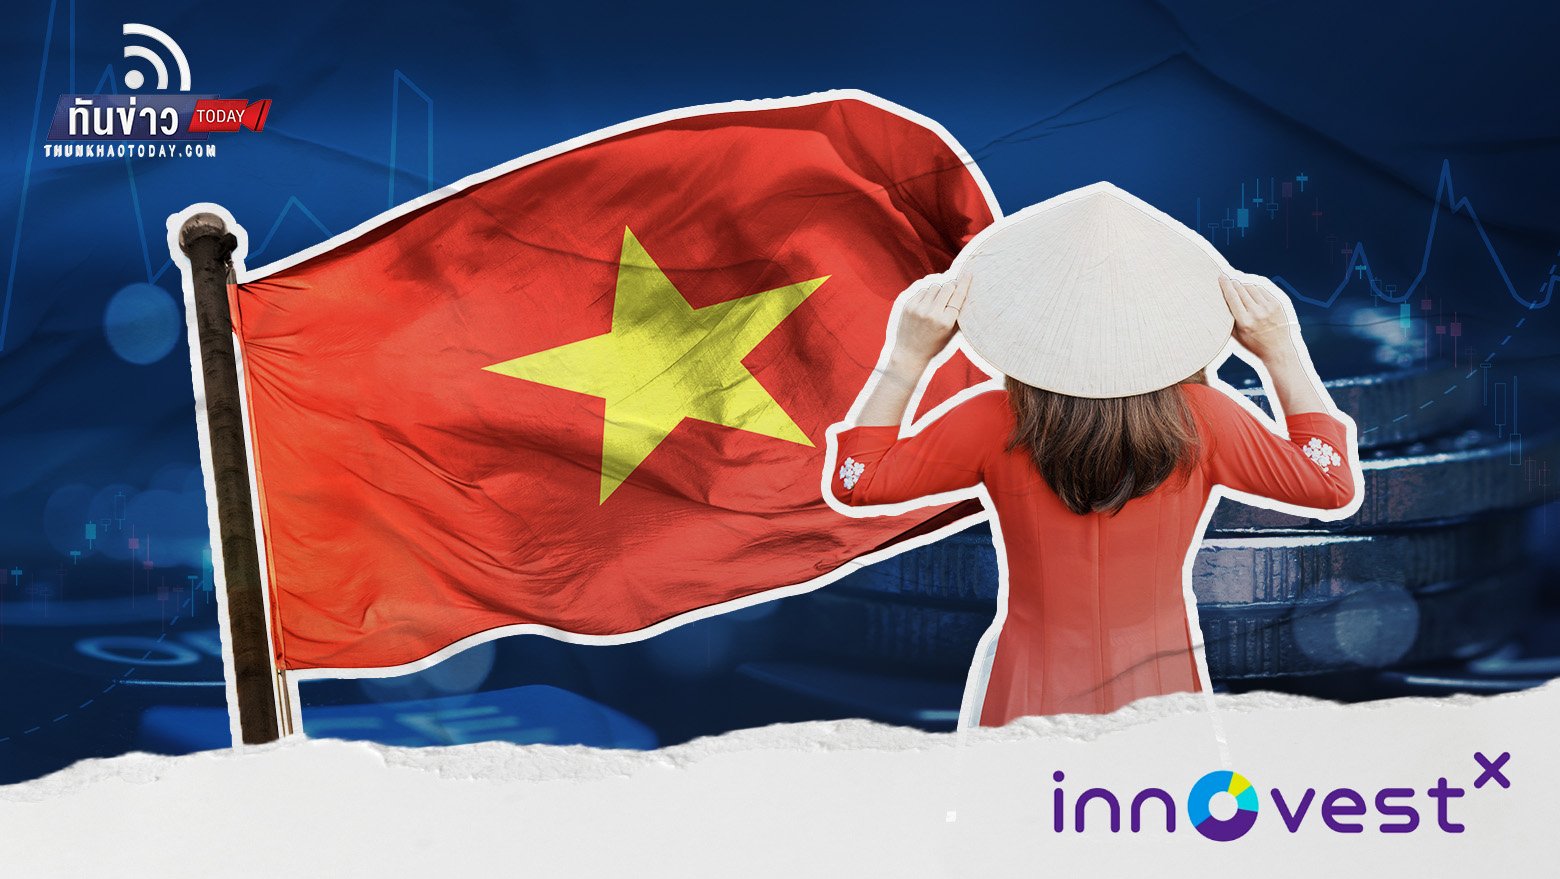 InnovestX แนะกระจายพอร์ตลงทุนเวียดนาม อินโดนีเซีย เติบโตแกร่งในปีหน้า